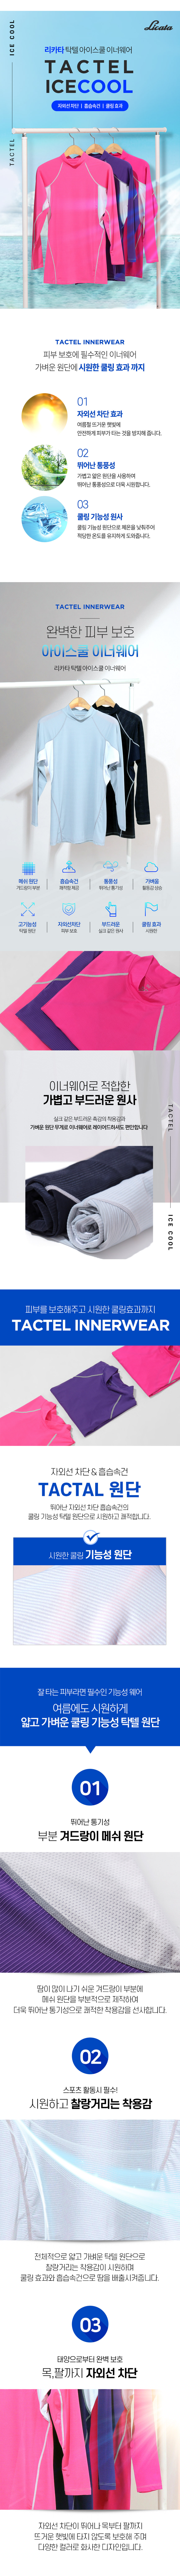 licata_2017_tactel_icecool_cooling_innerwear.jpg